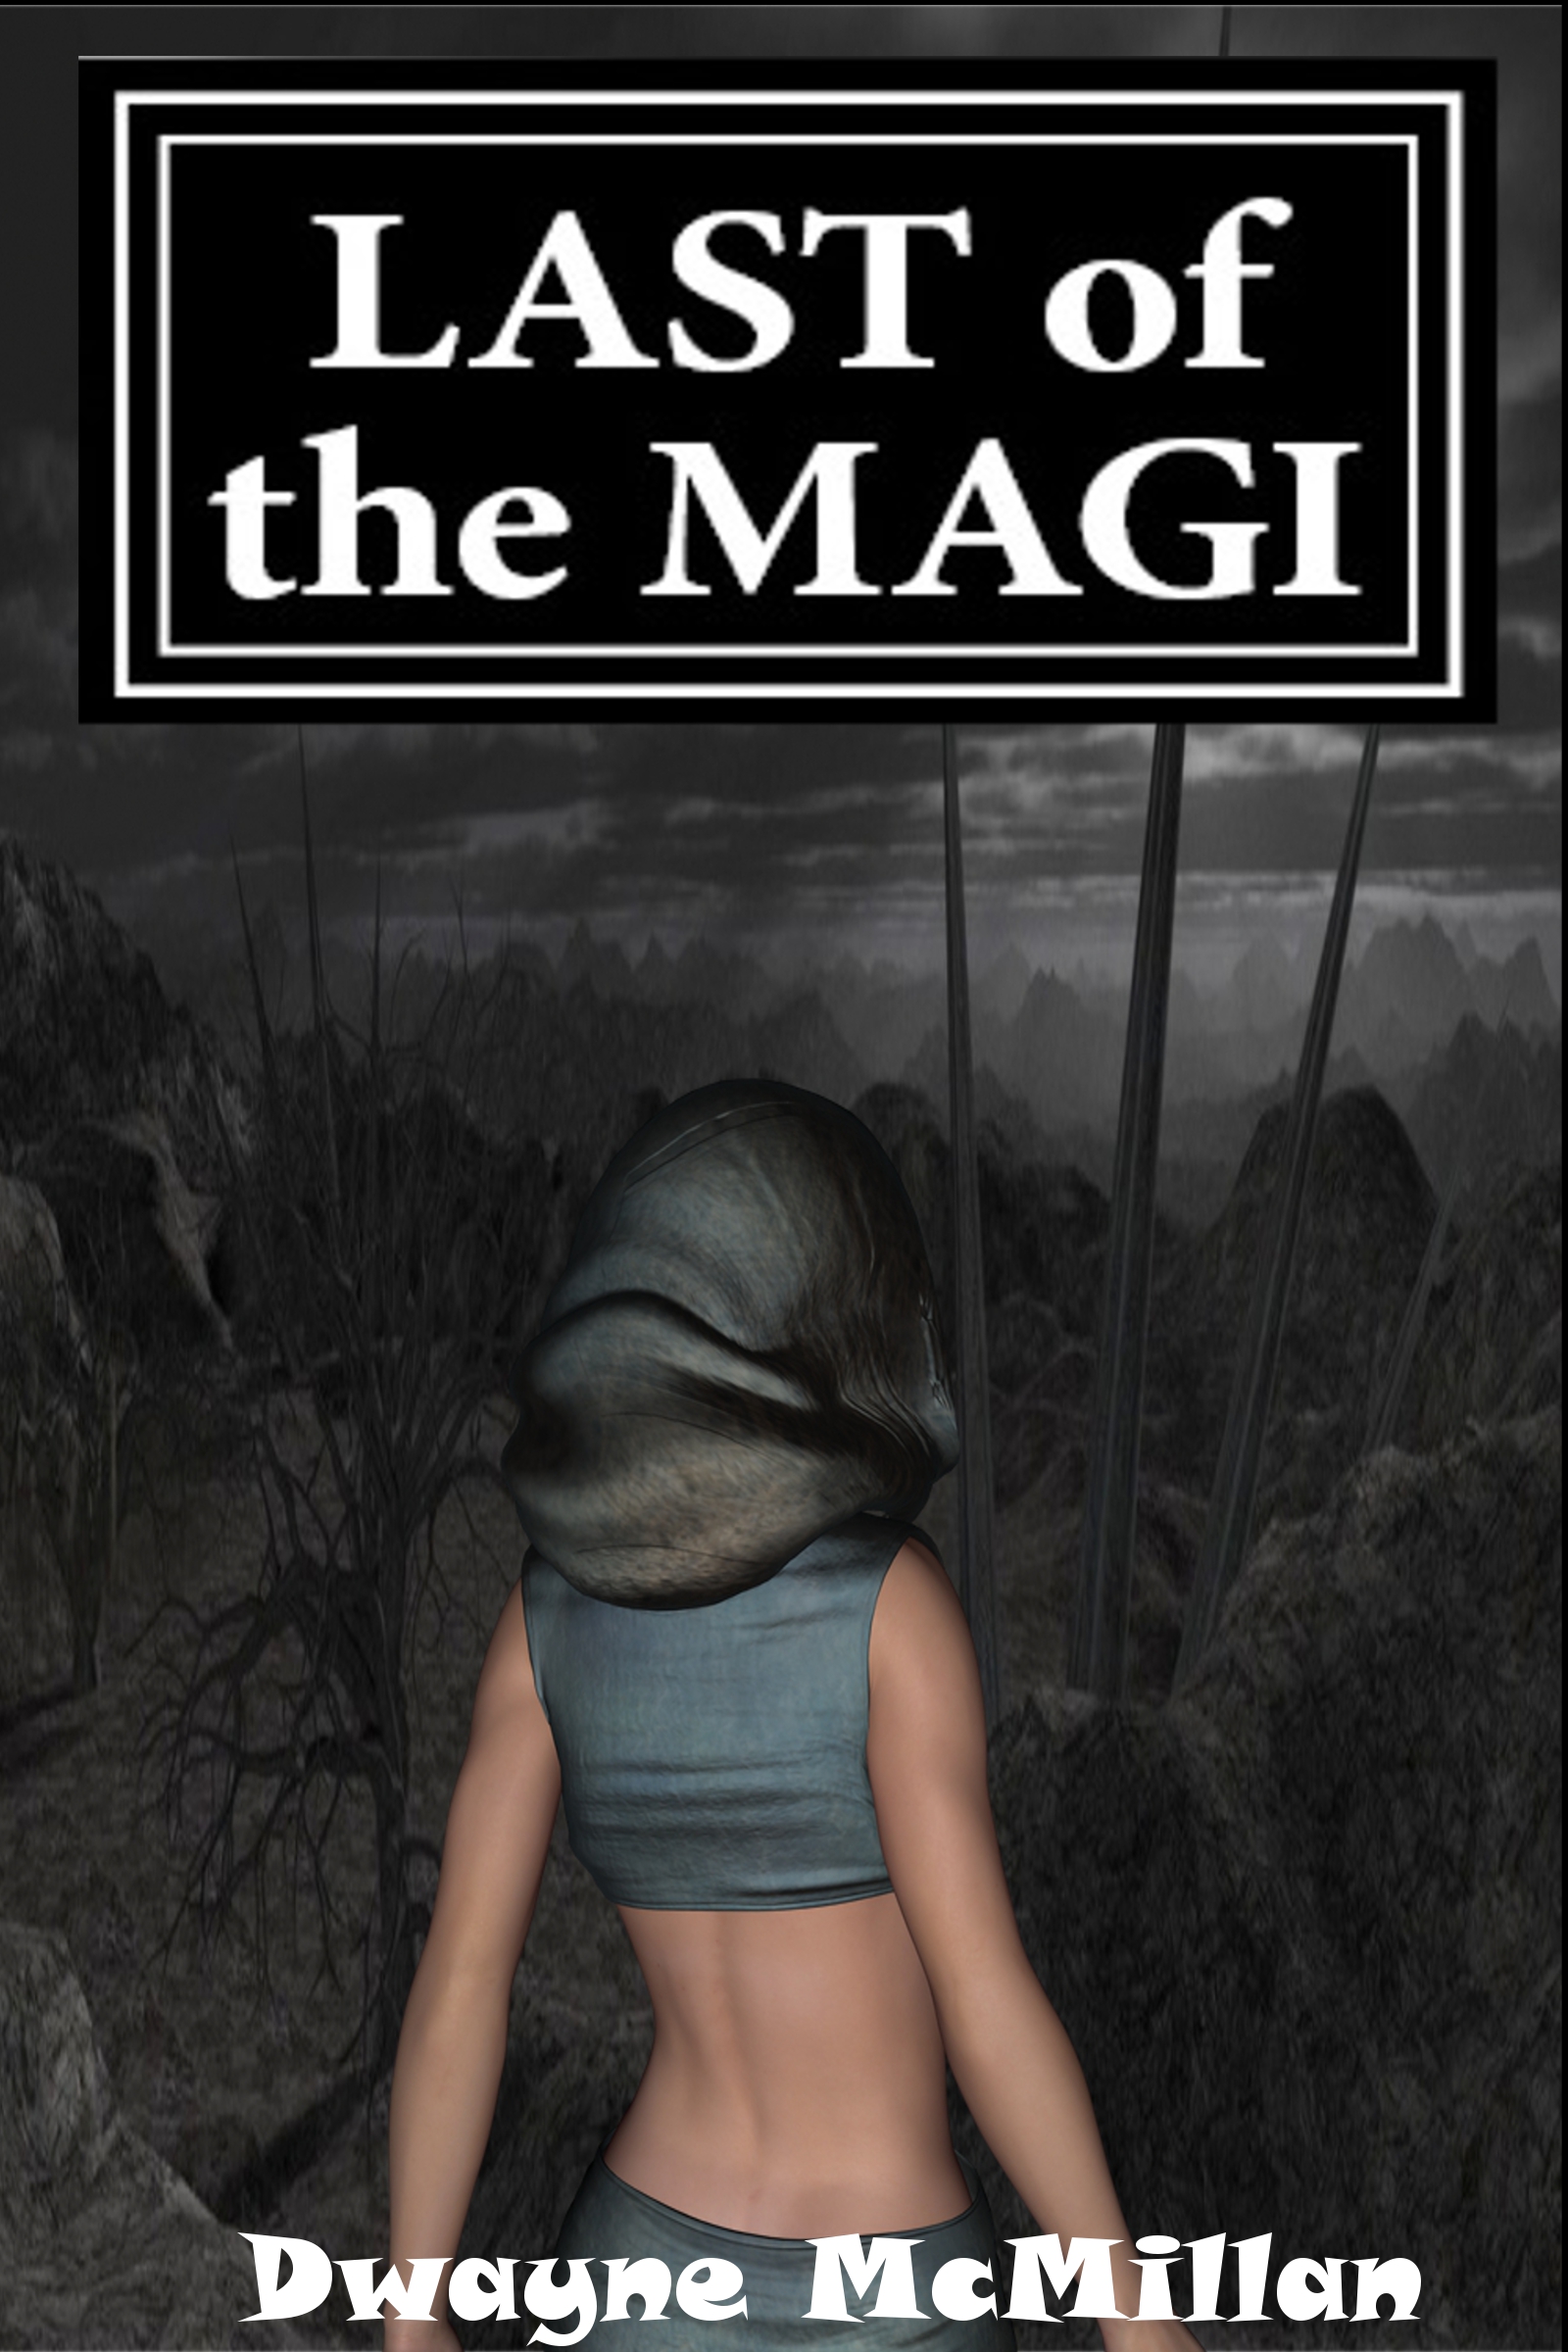 FREE: Last of the Magi by Dwayne McMillan